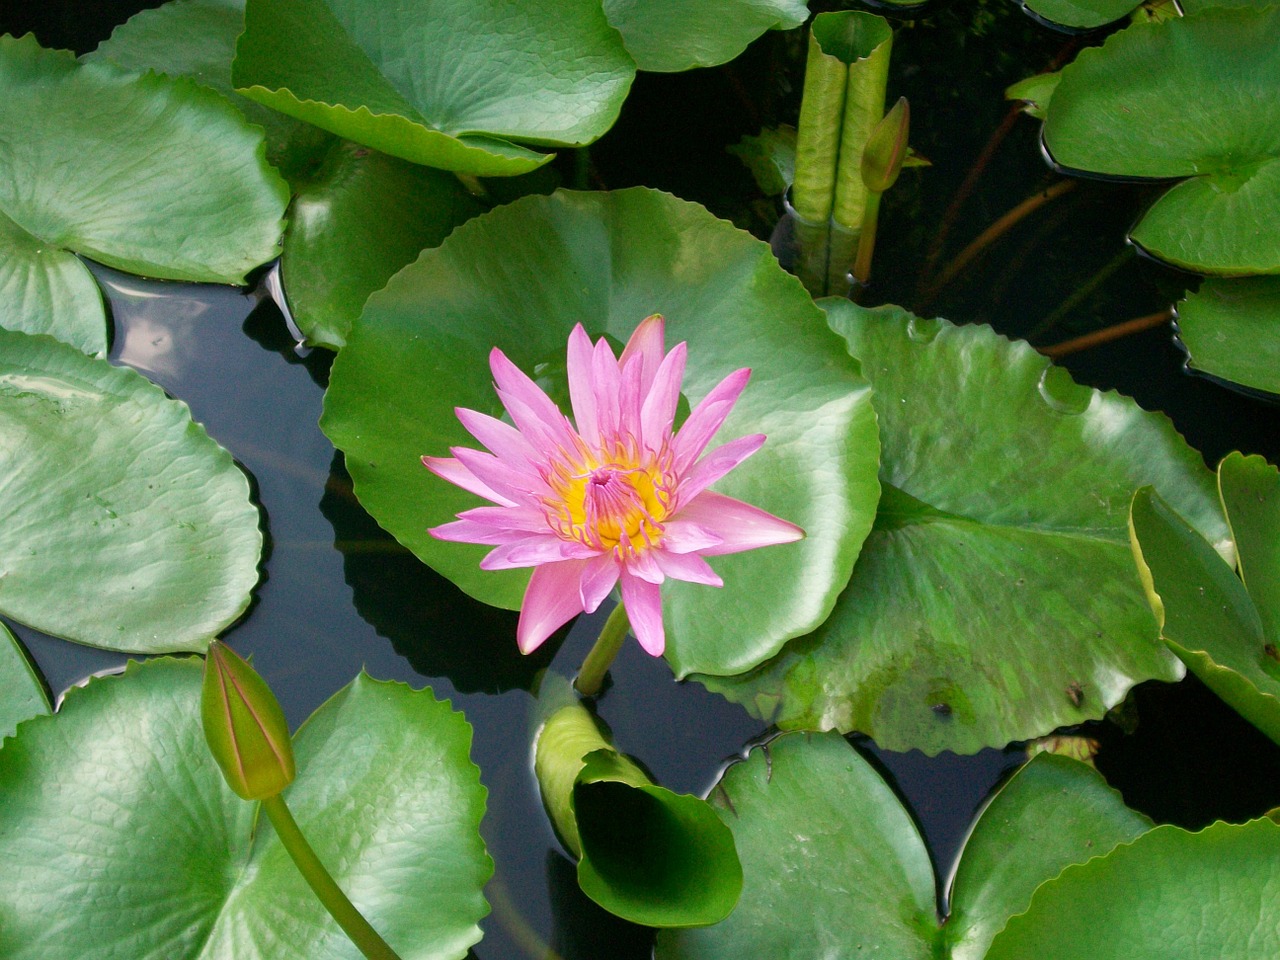 Lotus,flower,thailand,nature,lotus flowers - free image from needpix.com